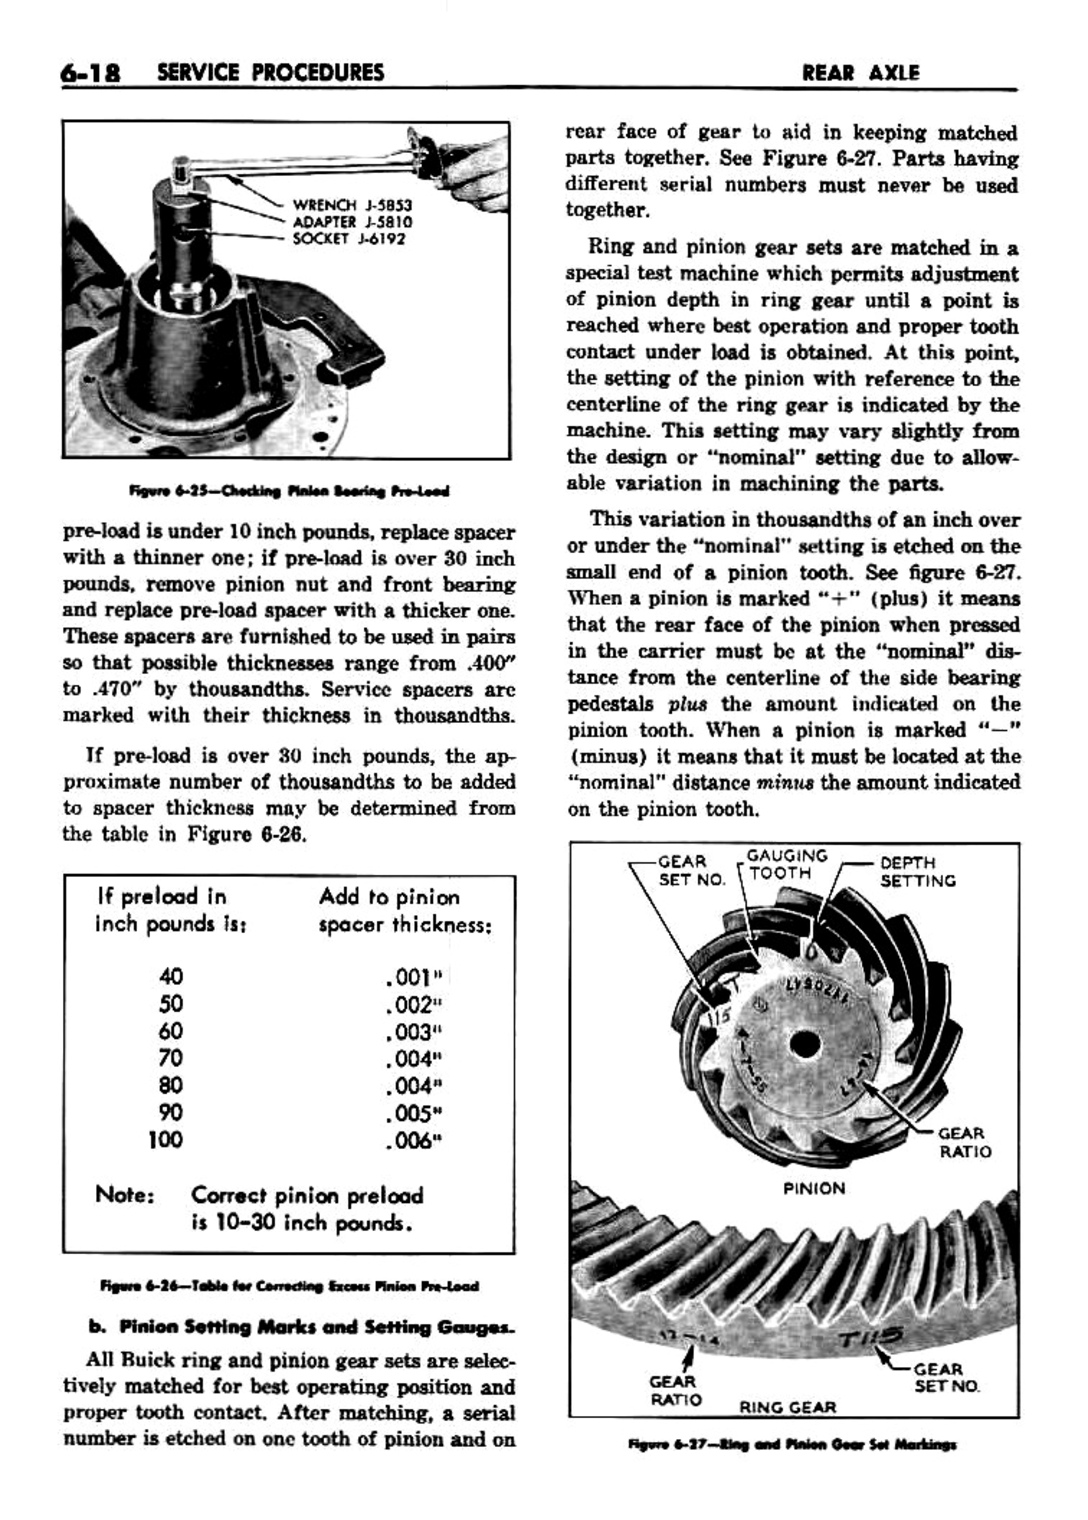 n_07 1959 Buick Shop Manual - Rear Axle-018-018.jpg